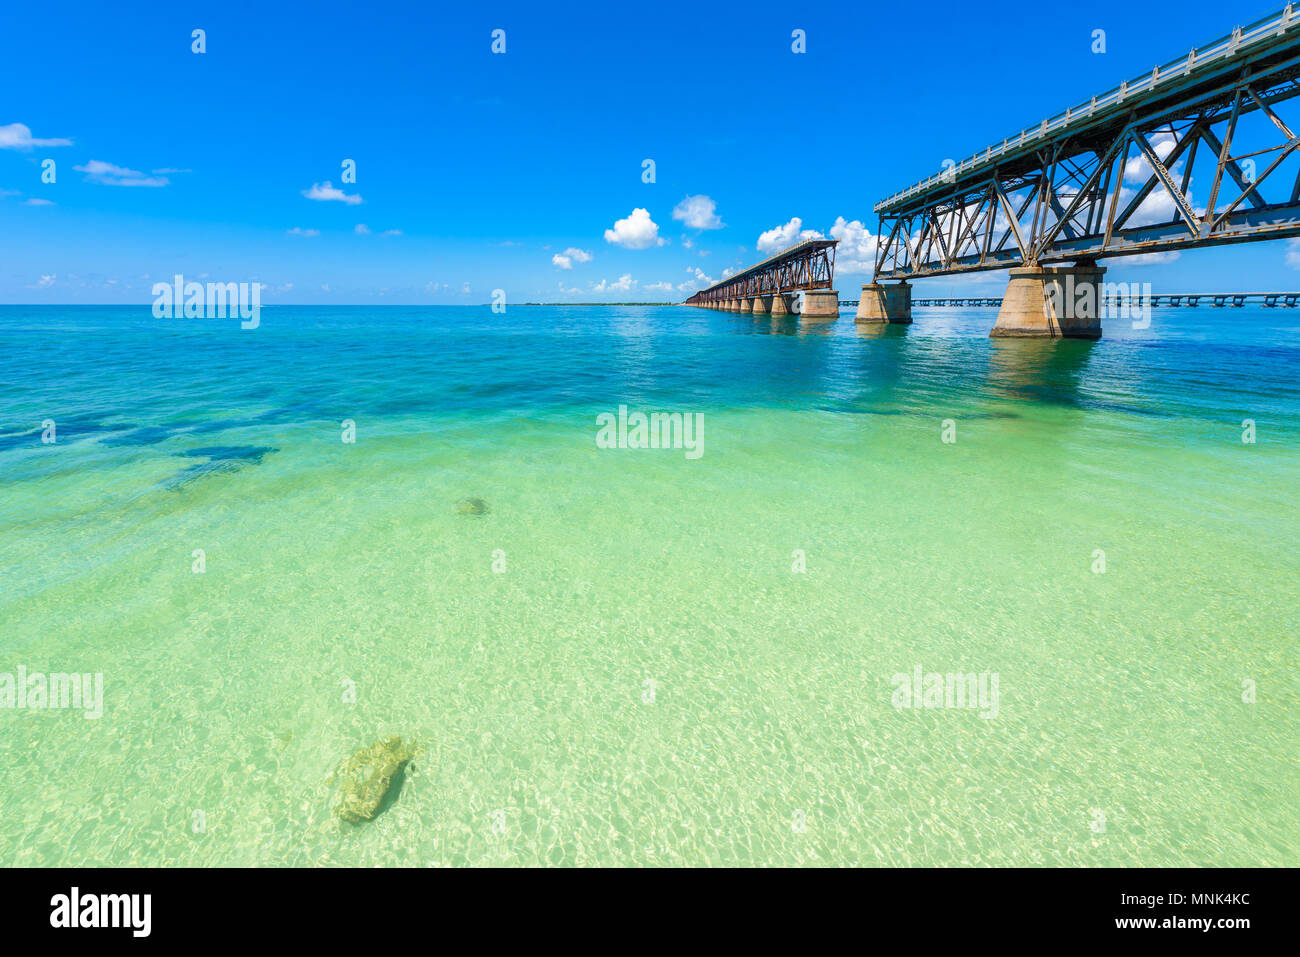 Bahia Honda State Park - Calusa Beach, Florida Keys - tropical coast with paradise beaches - USA Stock Photo